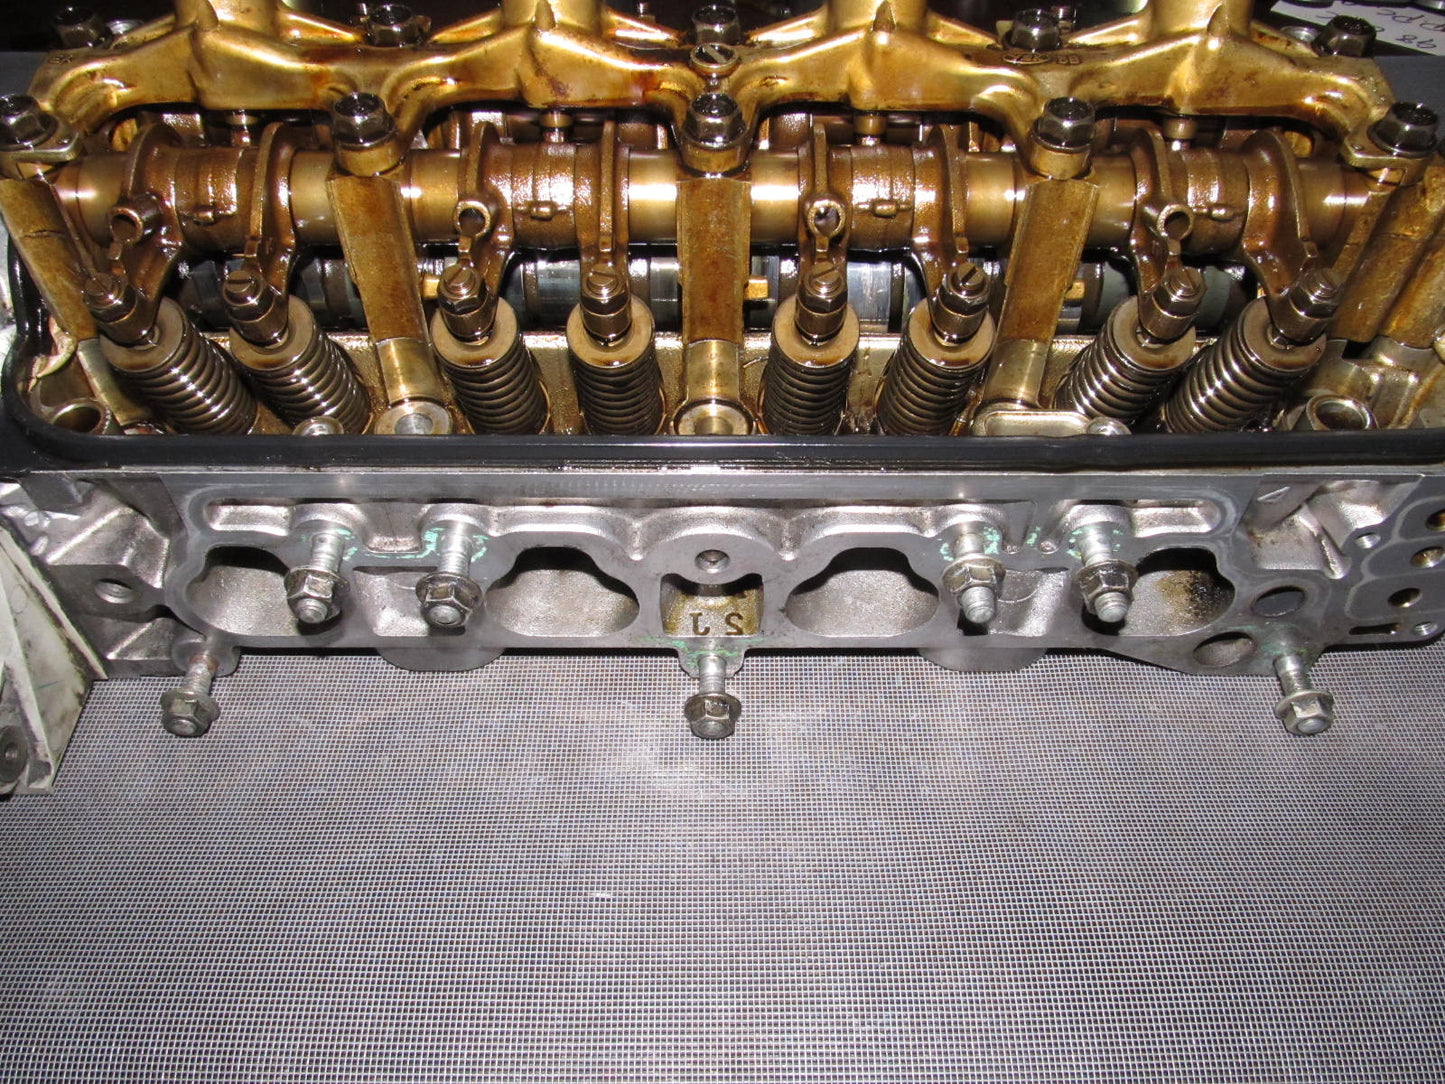 96 97 98 99 00 Honda Civic OEM D16Y8 Vtec Engine Cylinder Head